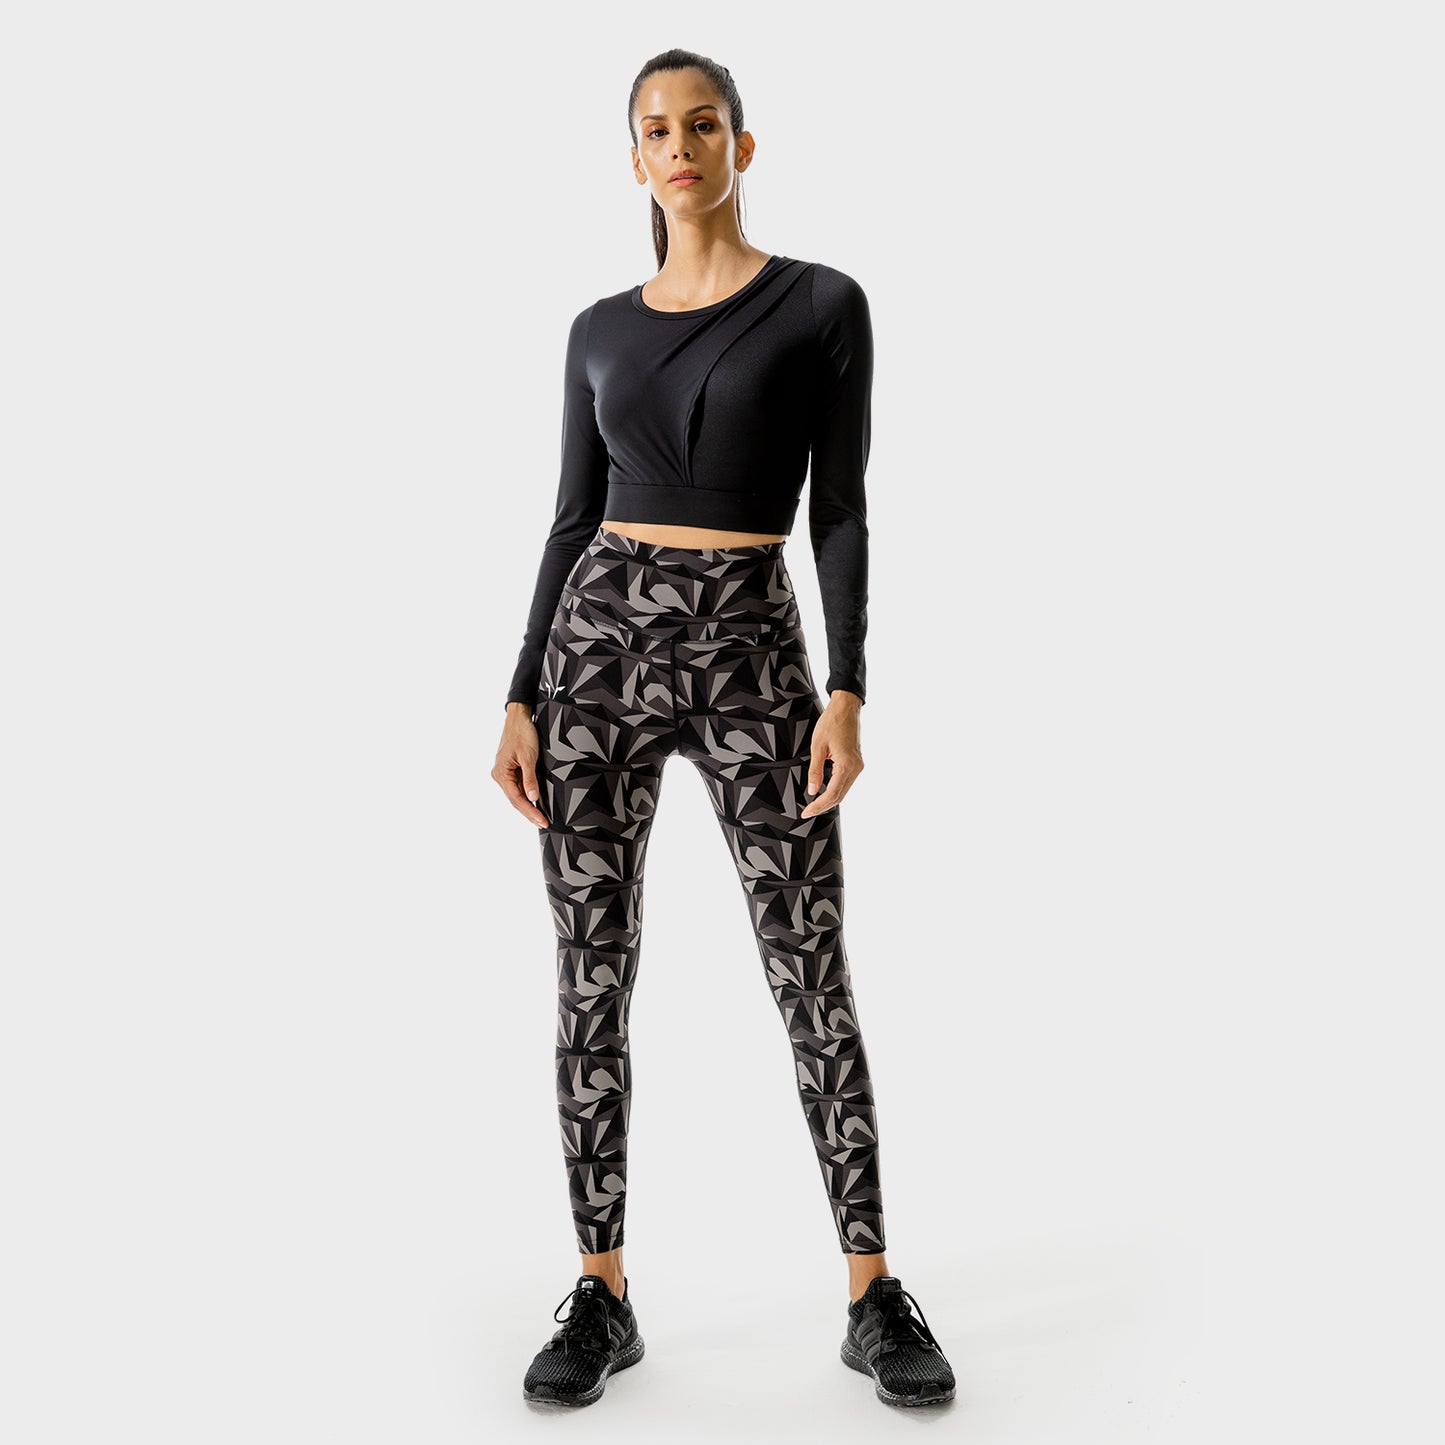 squatwolf-workout-tank-tops-for-women-lab-360-wrap-top-black-gym-wear